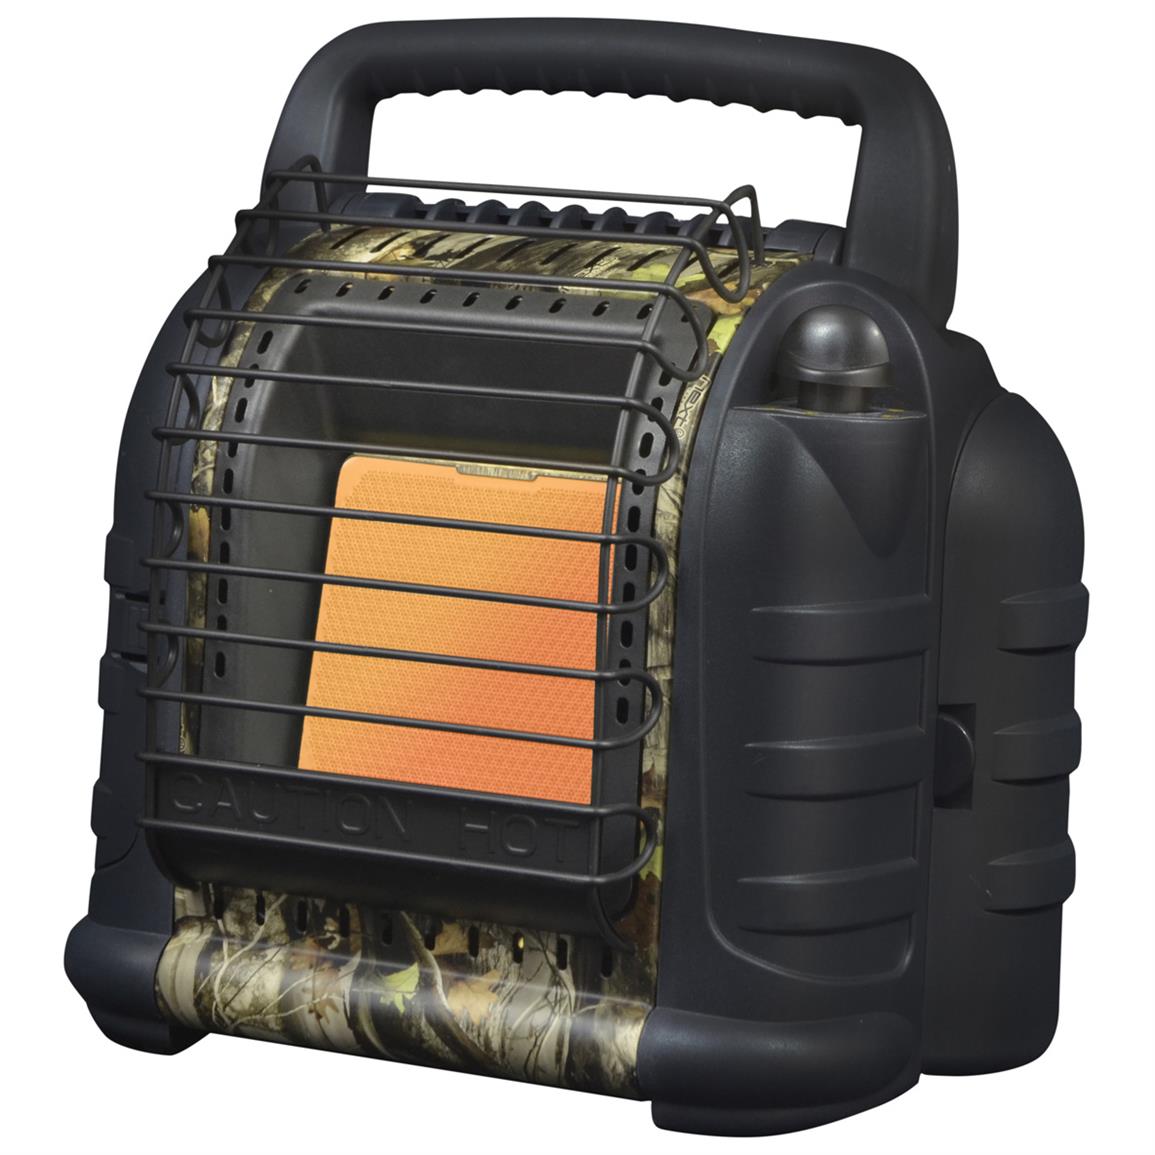 mr heater portable propane heater